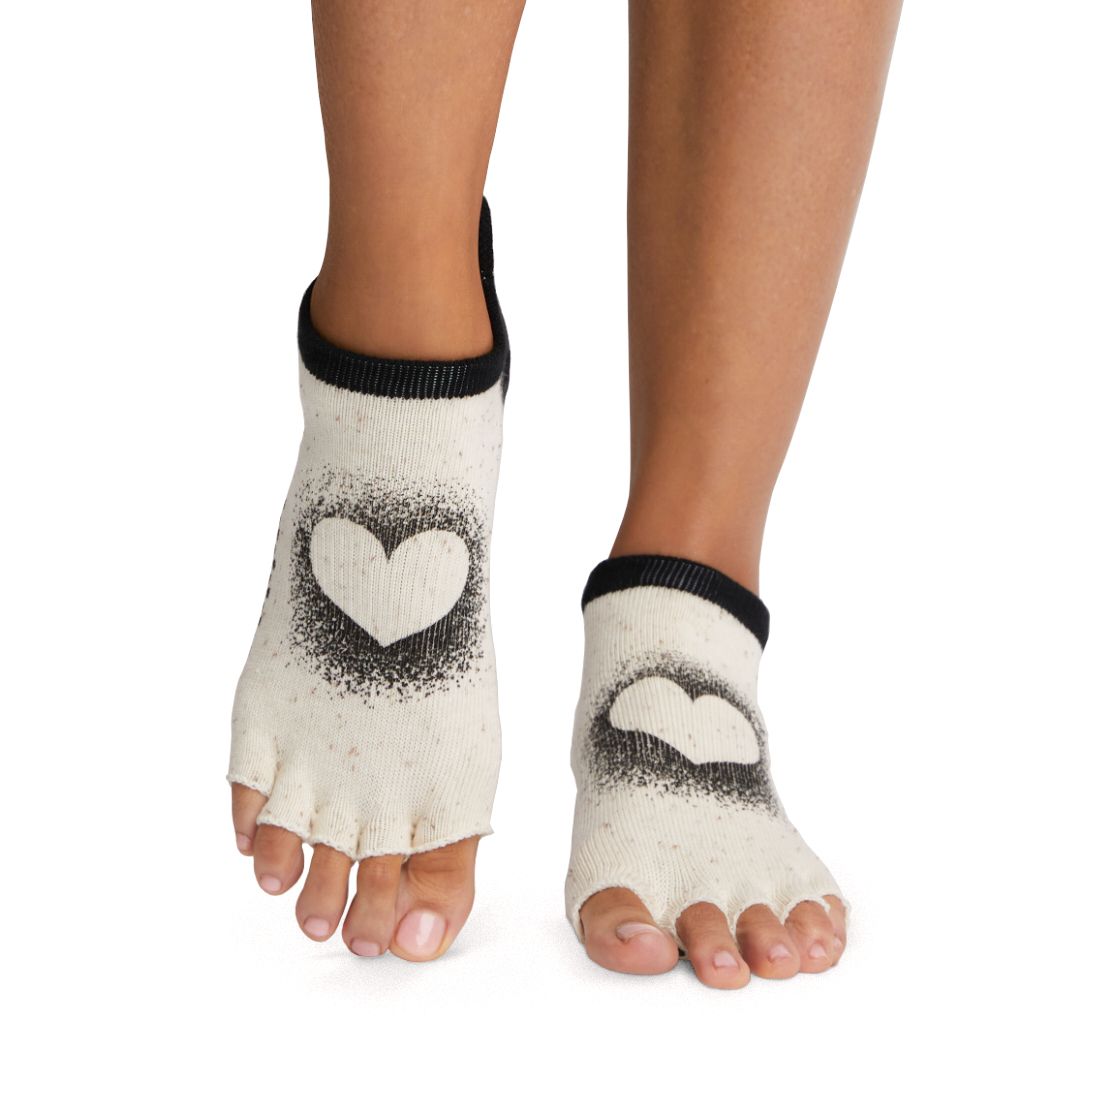 Toesox Yoga Socks Low Rise Full Toe - Black - Yogisha Amsterdam